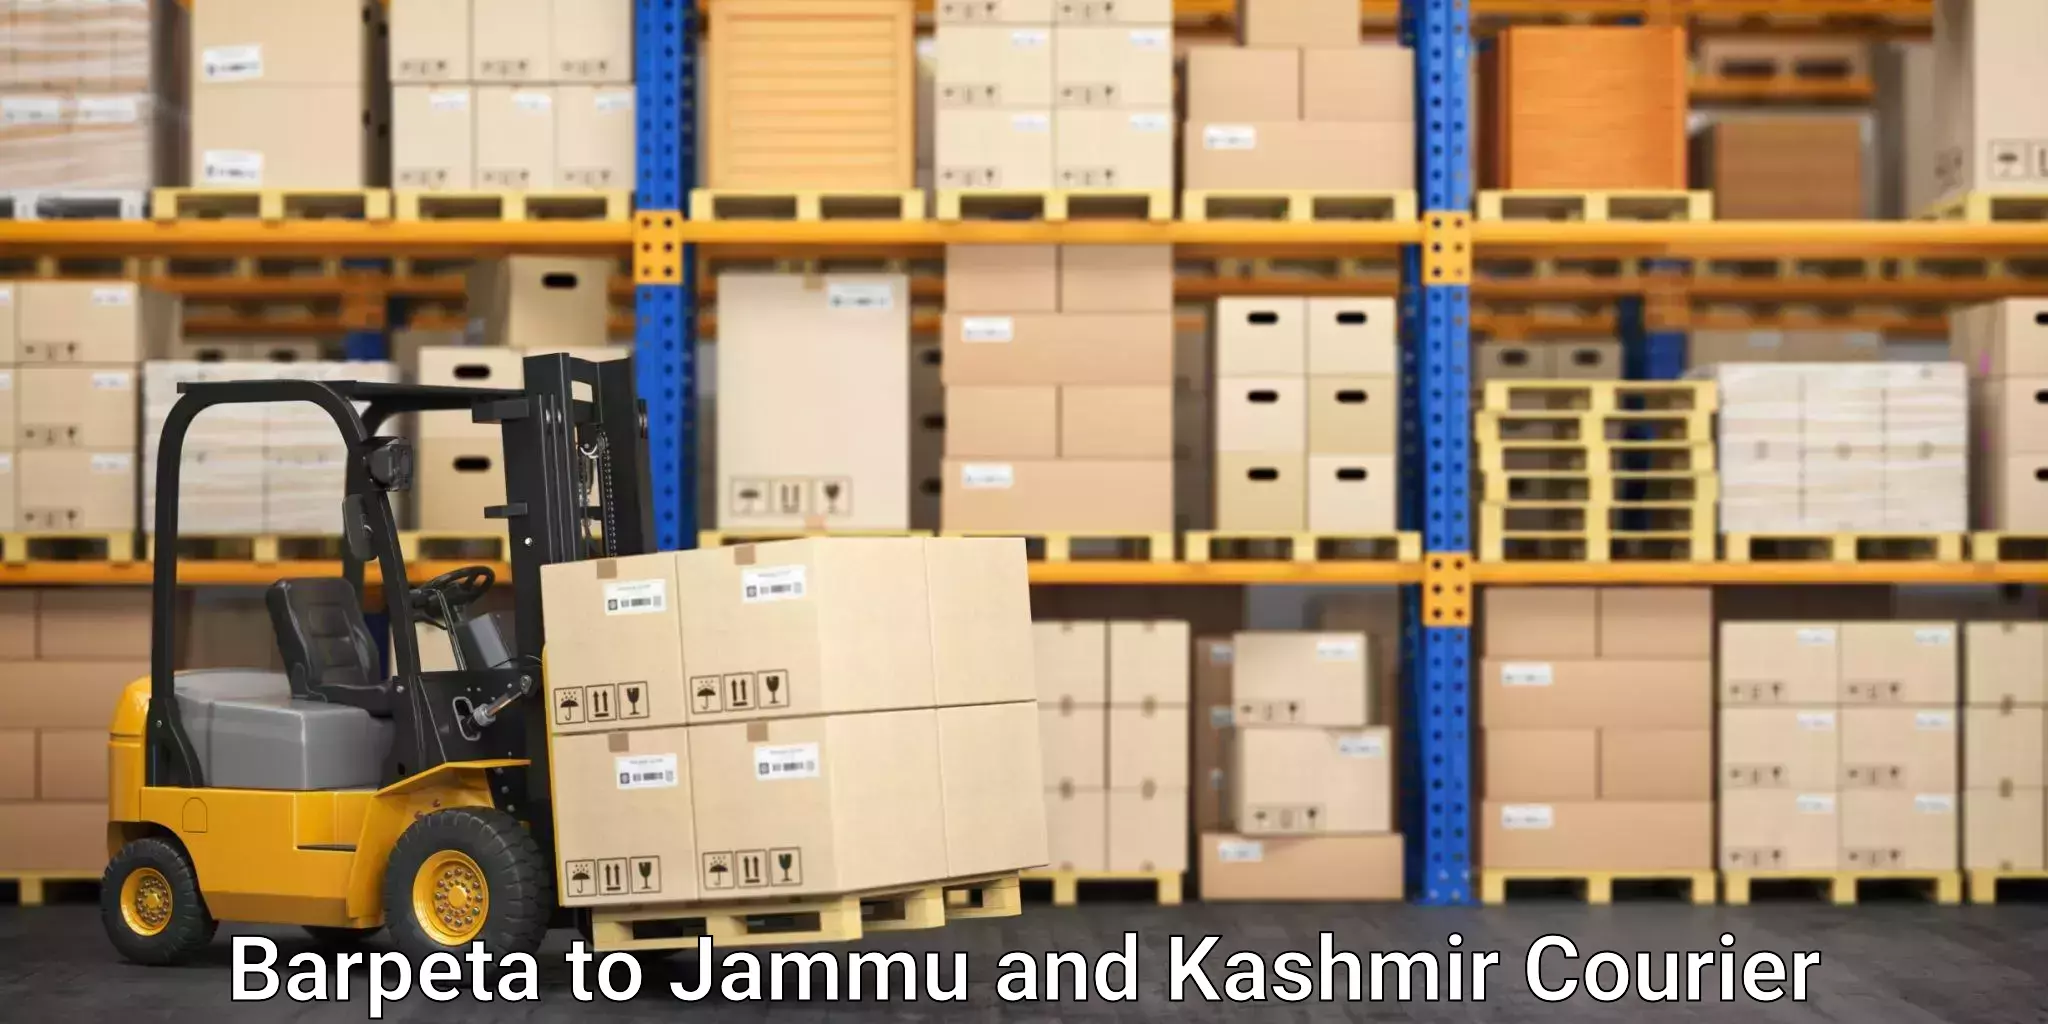 Efficient package consolidation Barpeta to Srinagar Kashmir